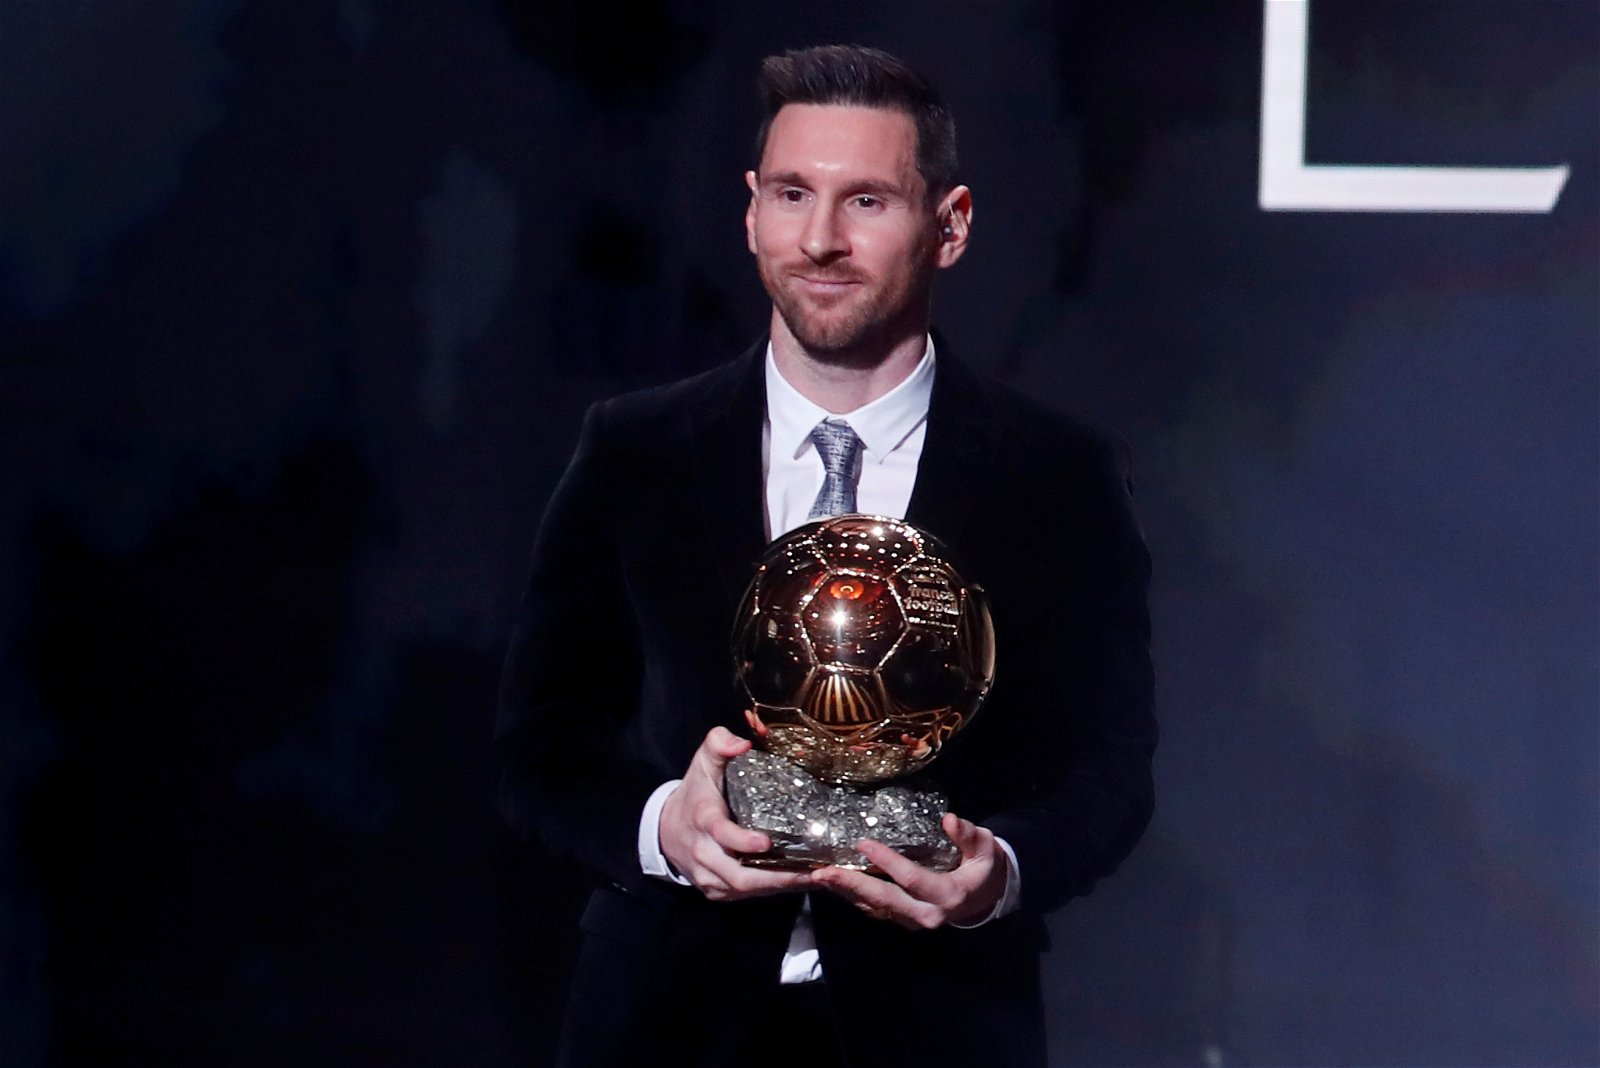 Barcelona prodigy Lionel Messi wins record sixth men's Ballon d'Or award